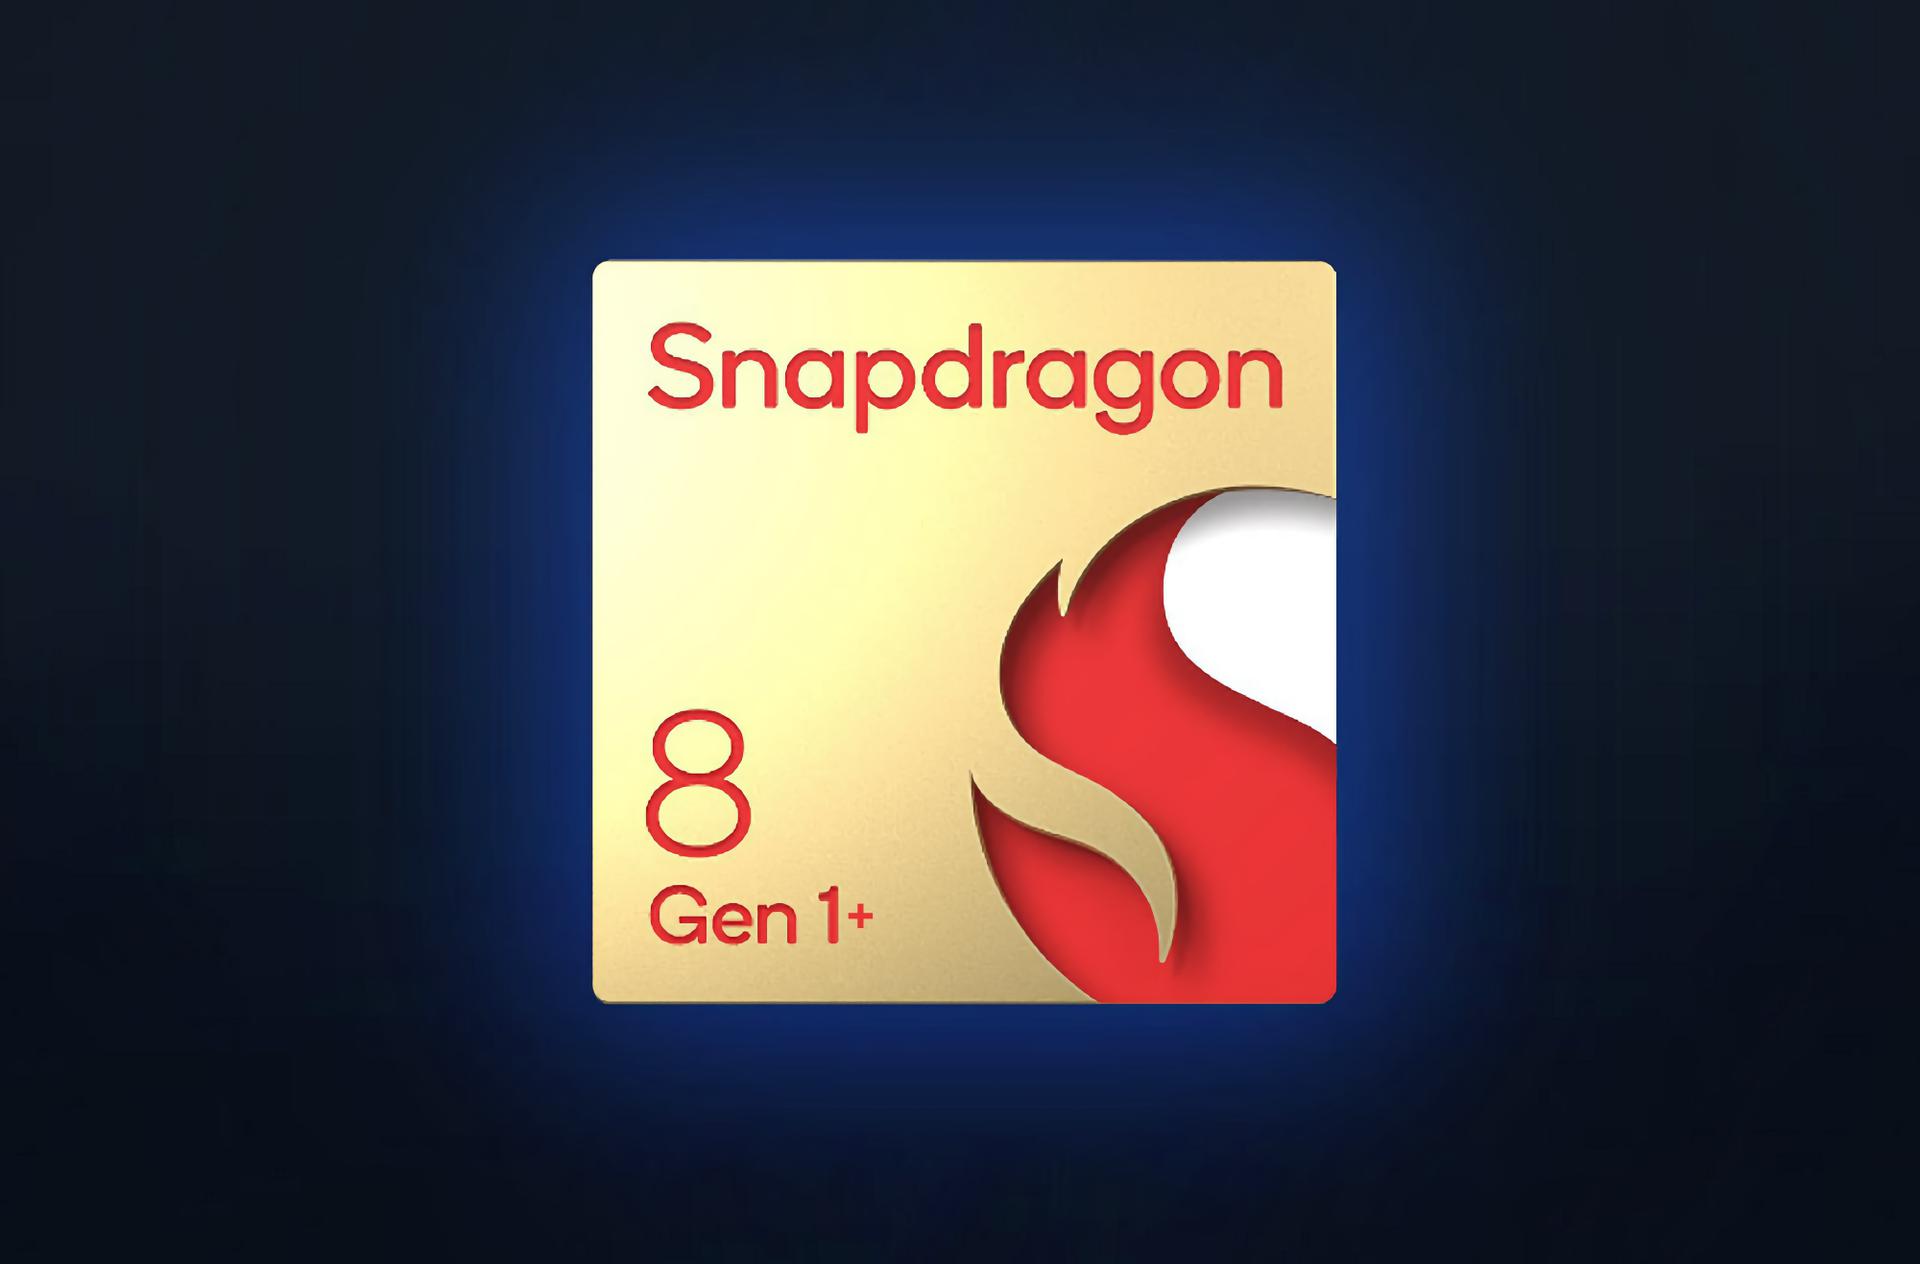 Insider: Qualcomm will introduce the flagship processor Snapdragon 8 Gen 1+ next week